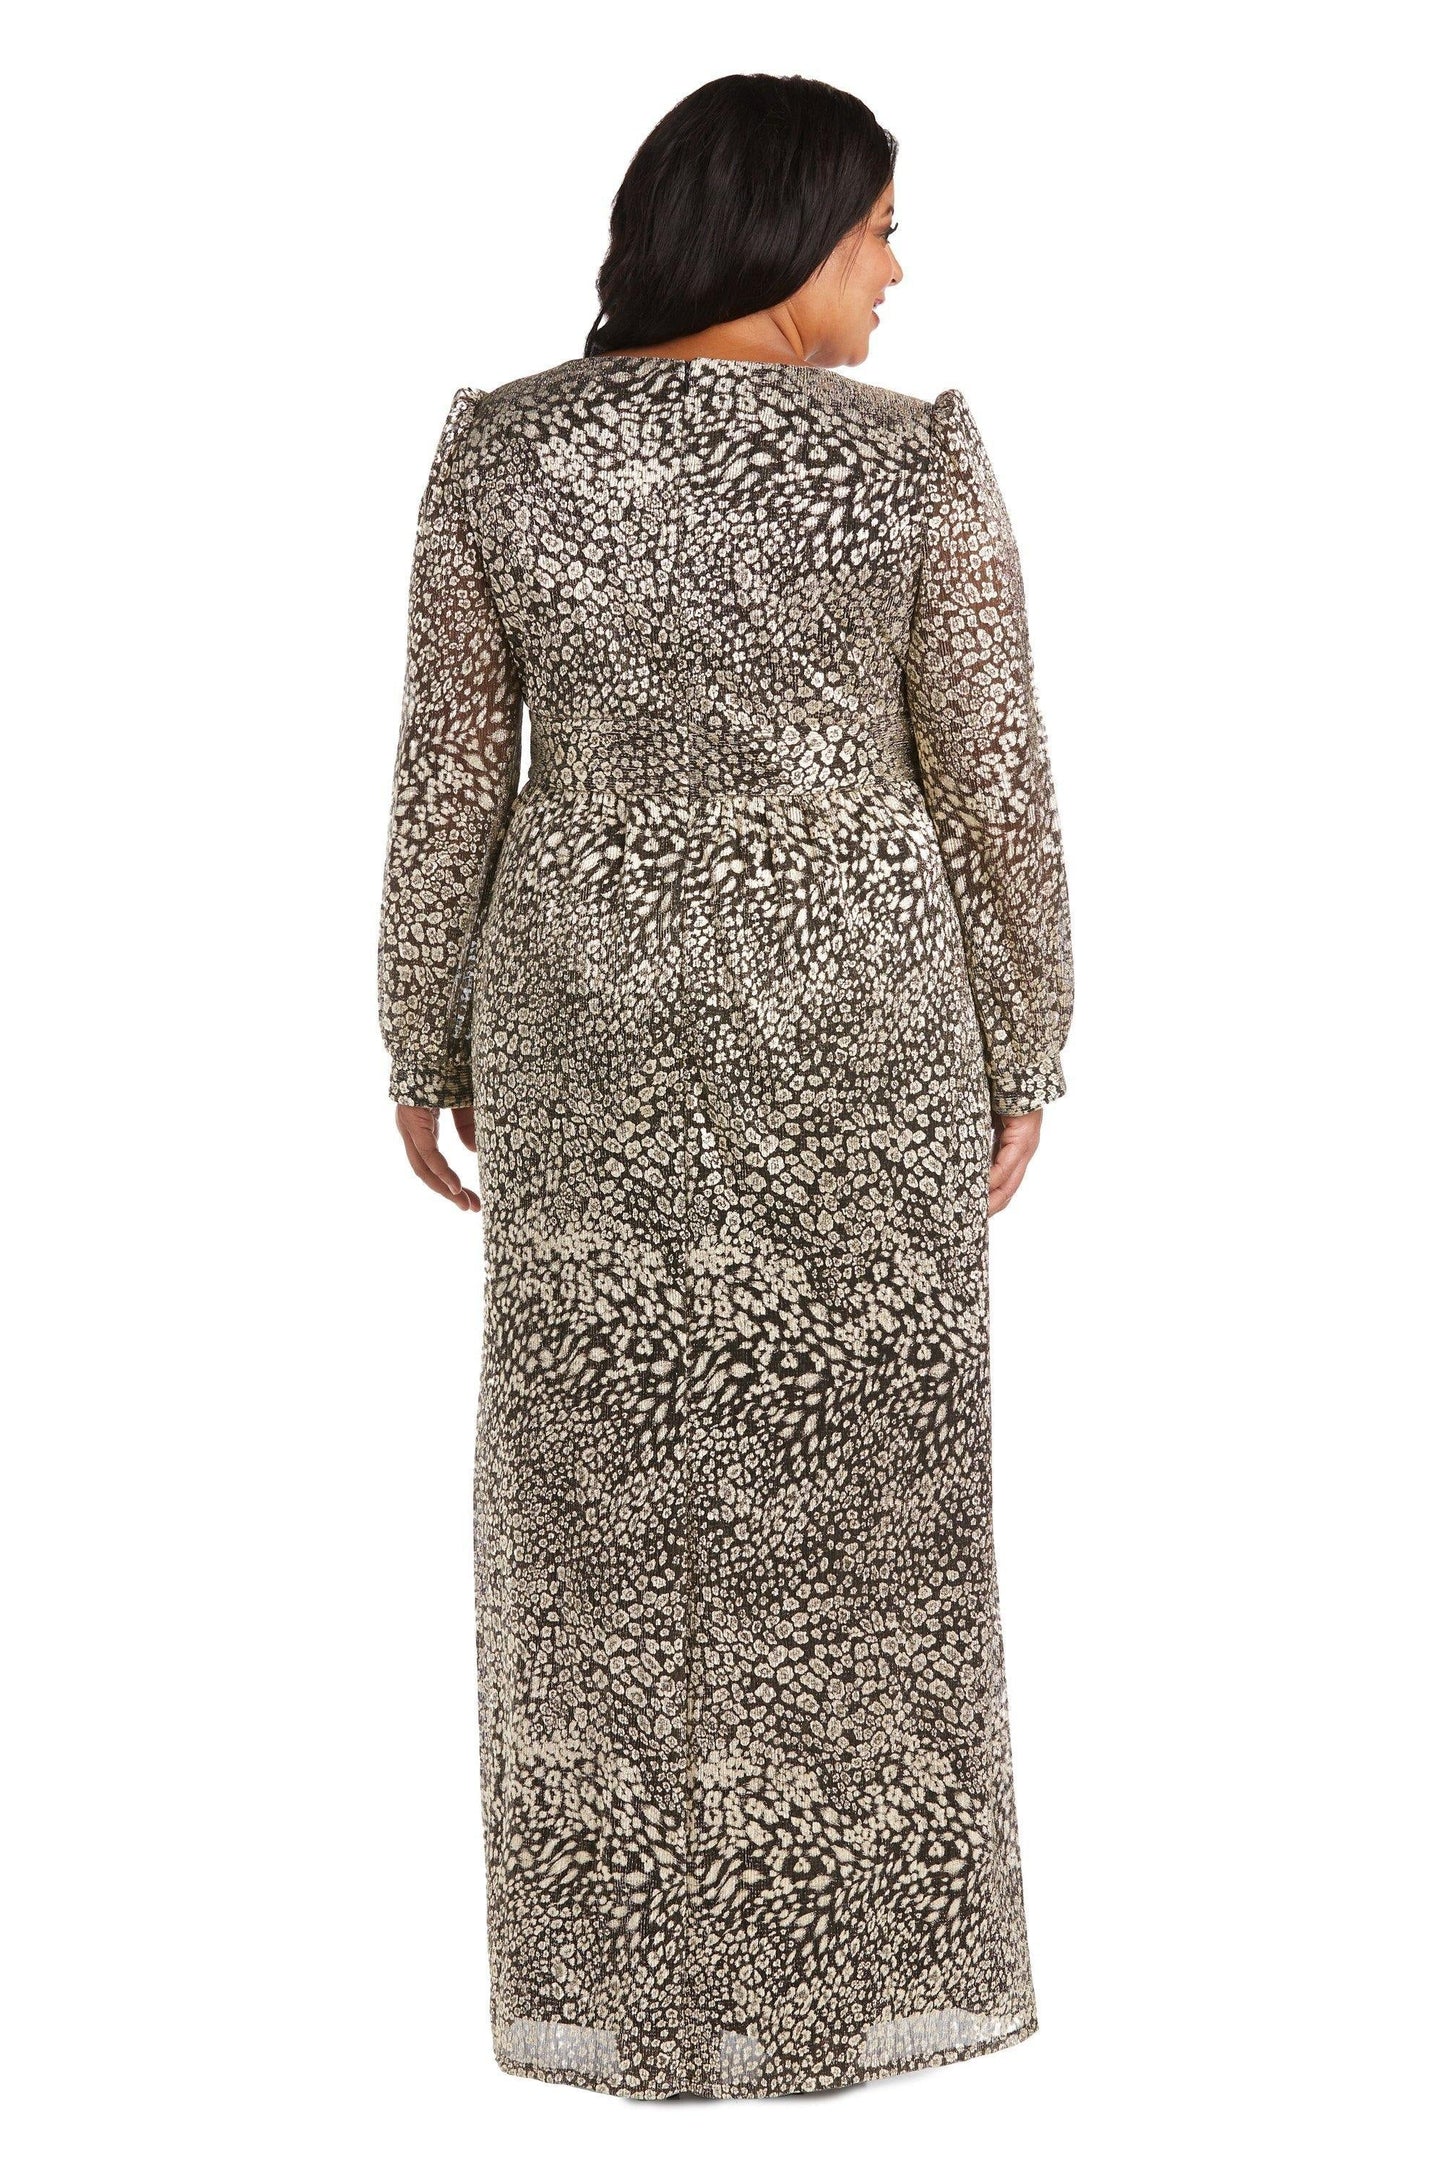 R&M Richards Long Plus Size Metallic Dress 2462W - The Dress Outlet